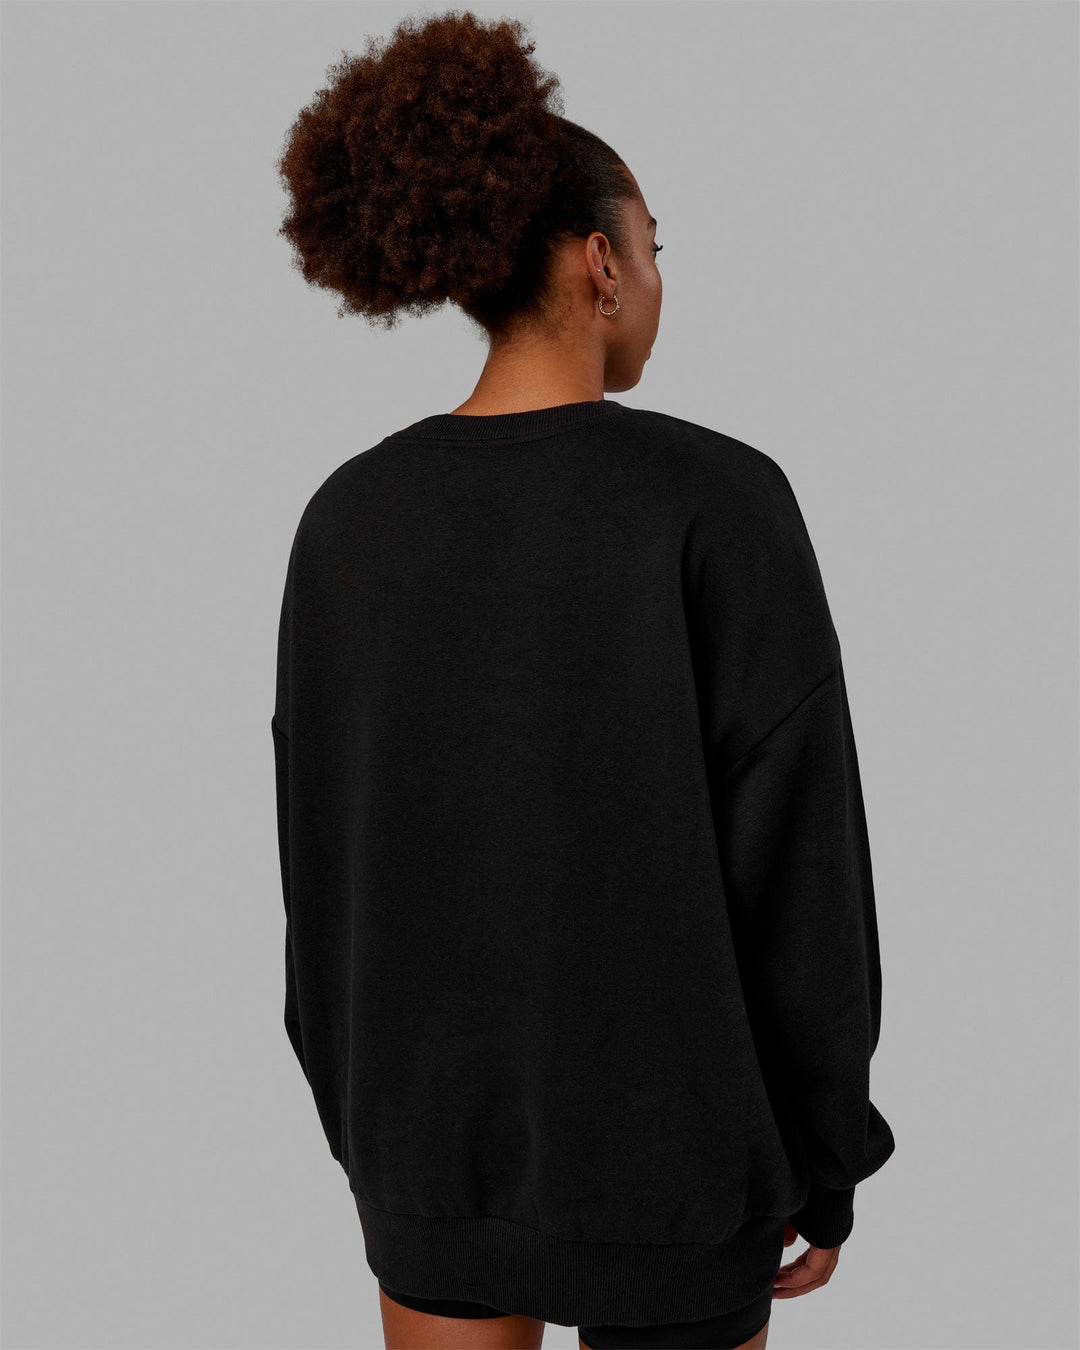 Woman wearing Unisex MVP Sweater Oversize - Black